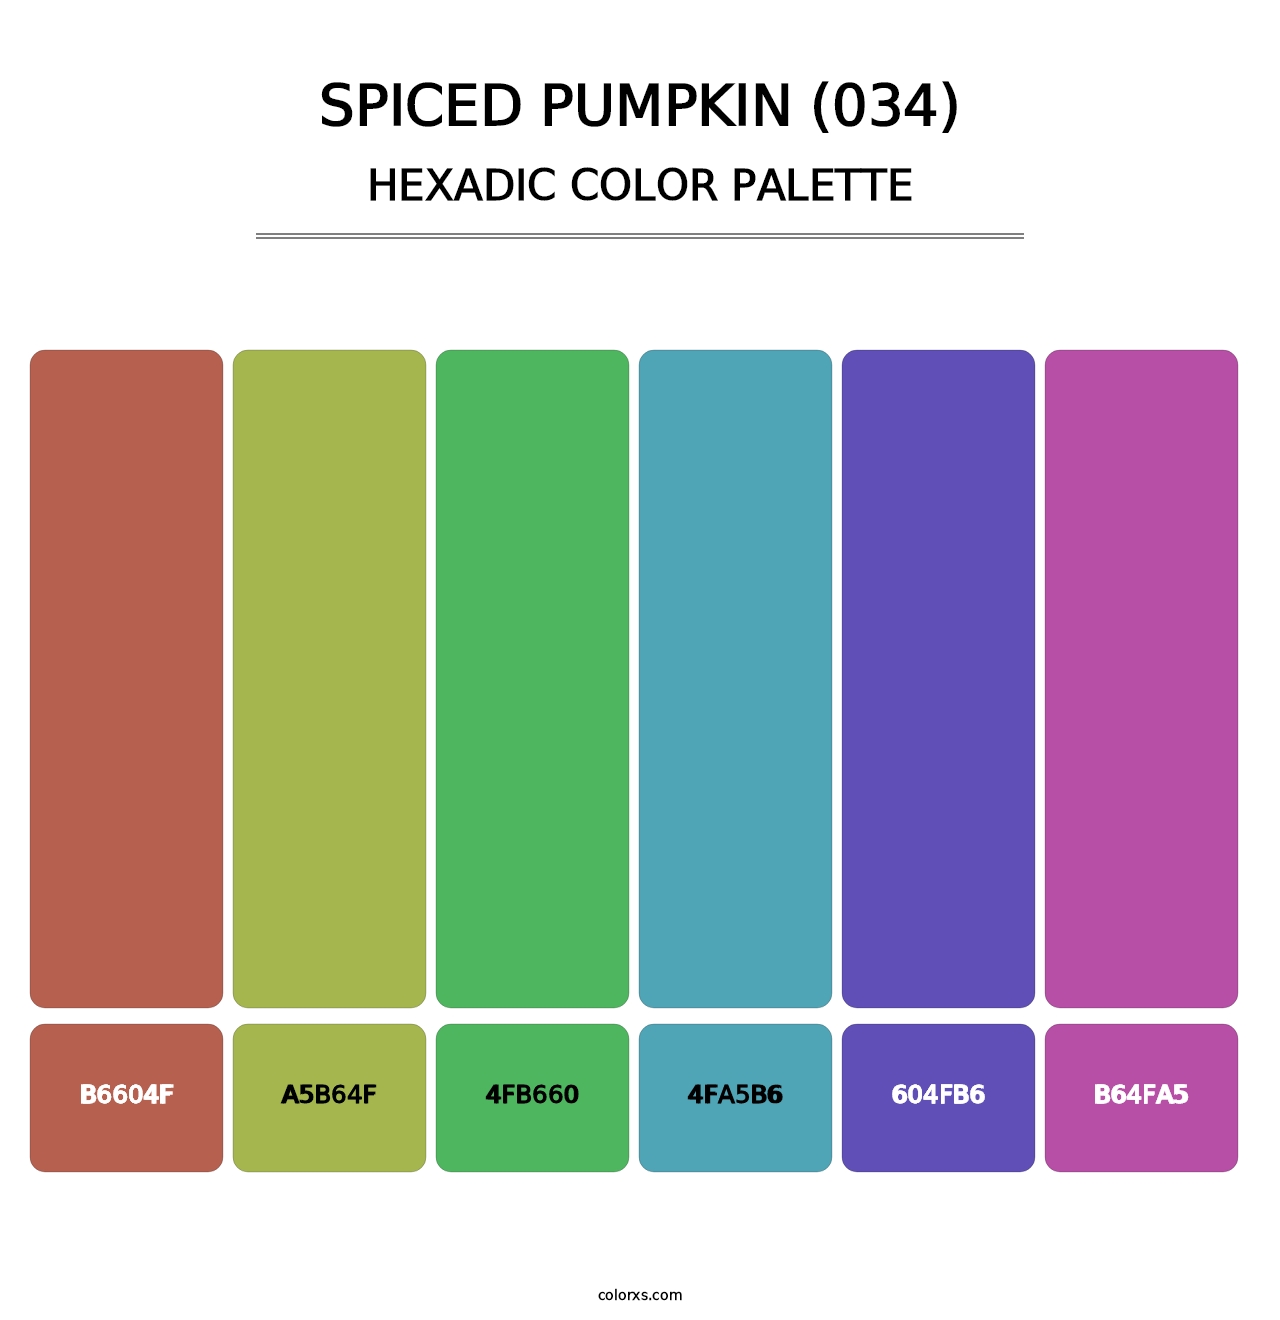 Spiced Pumpkin (034) - Hexadic Color Palette